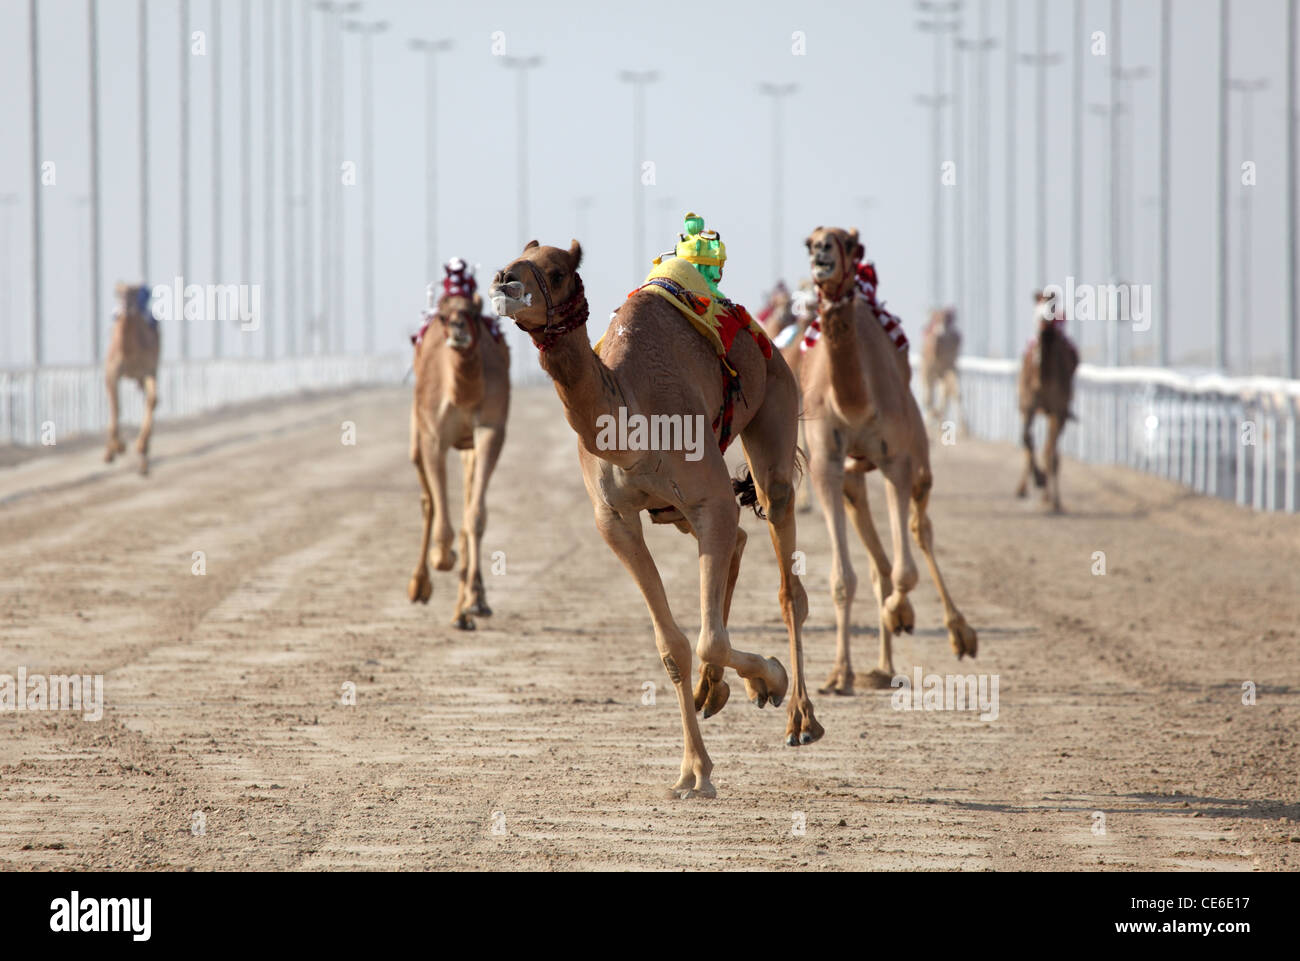 Racing camels with a robot jockey, Doha Qatar Stock Photo